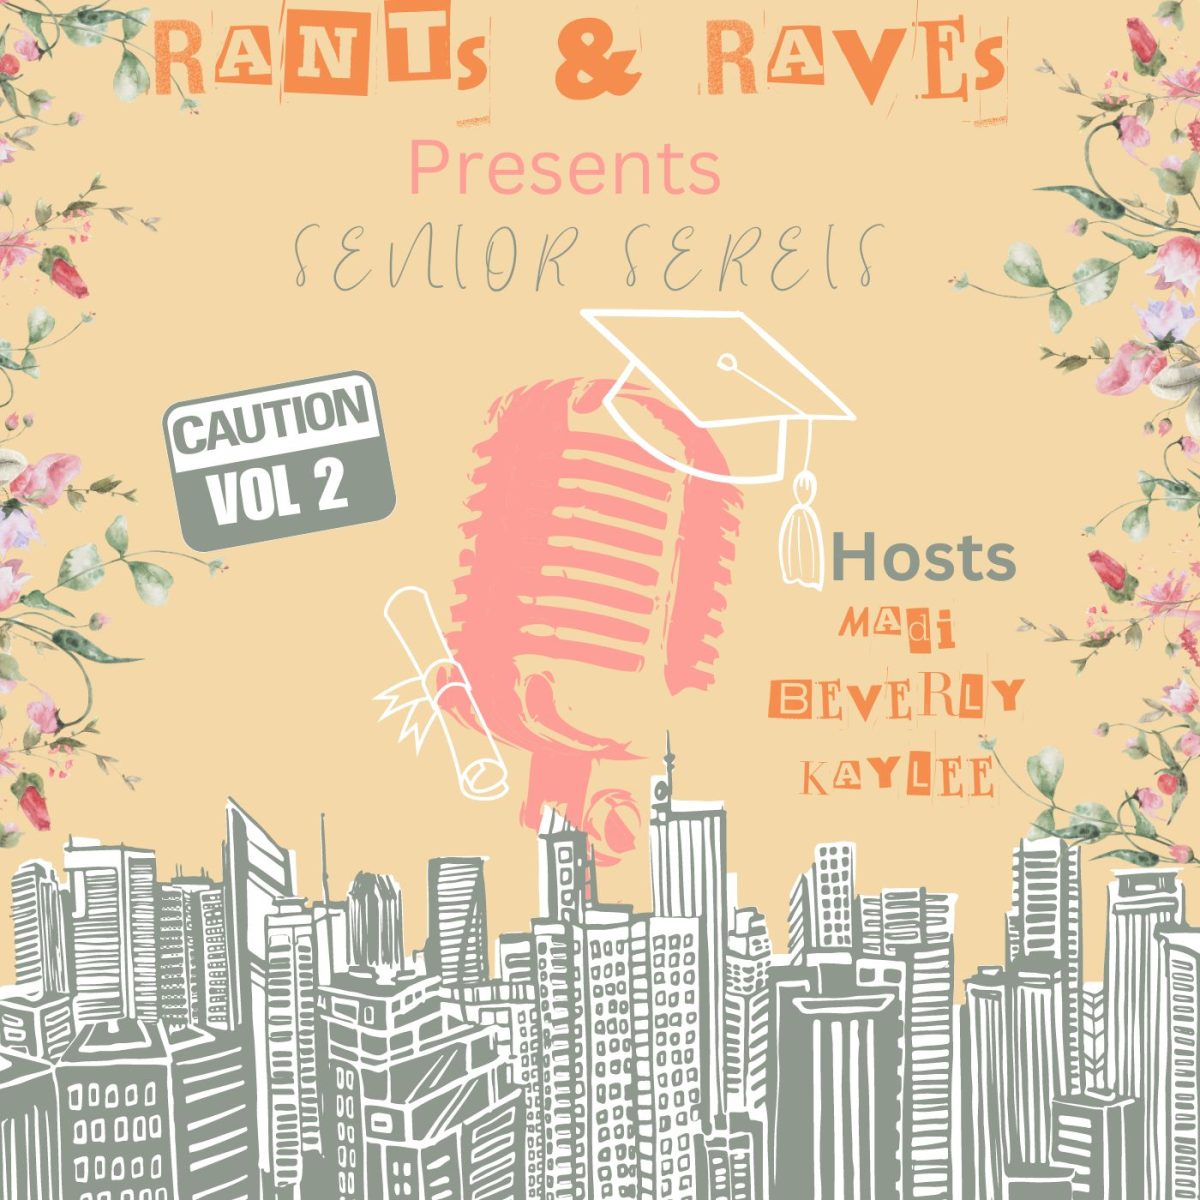 Rants & Raves presents: Senior series